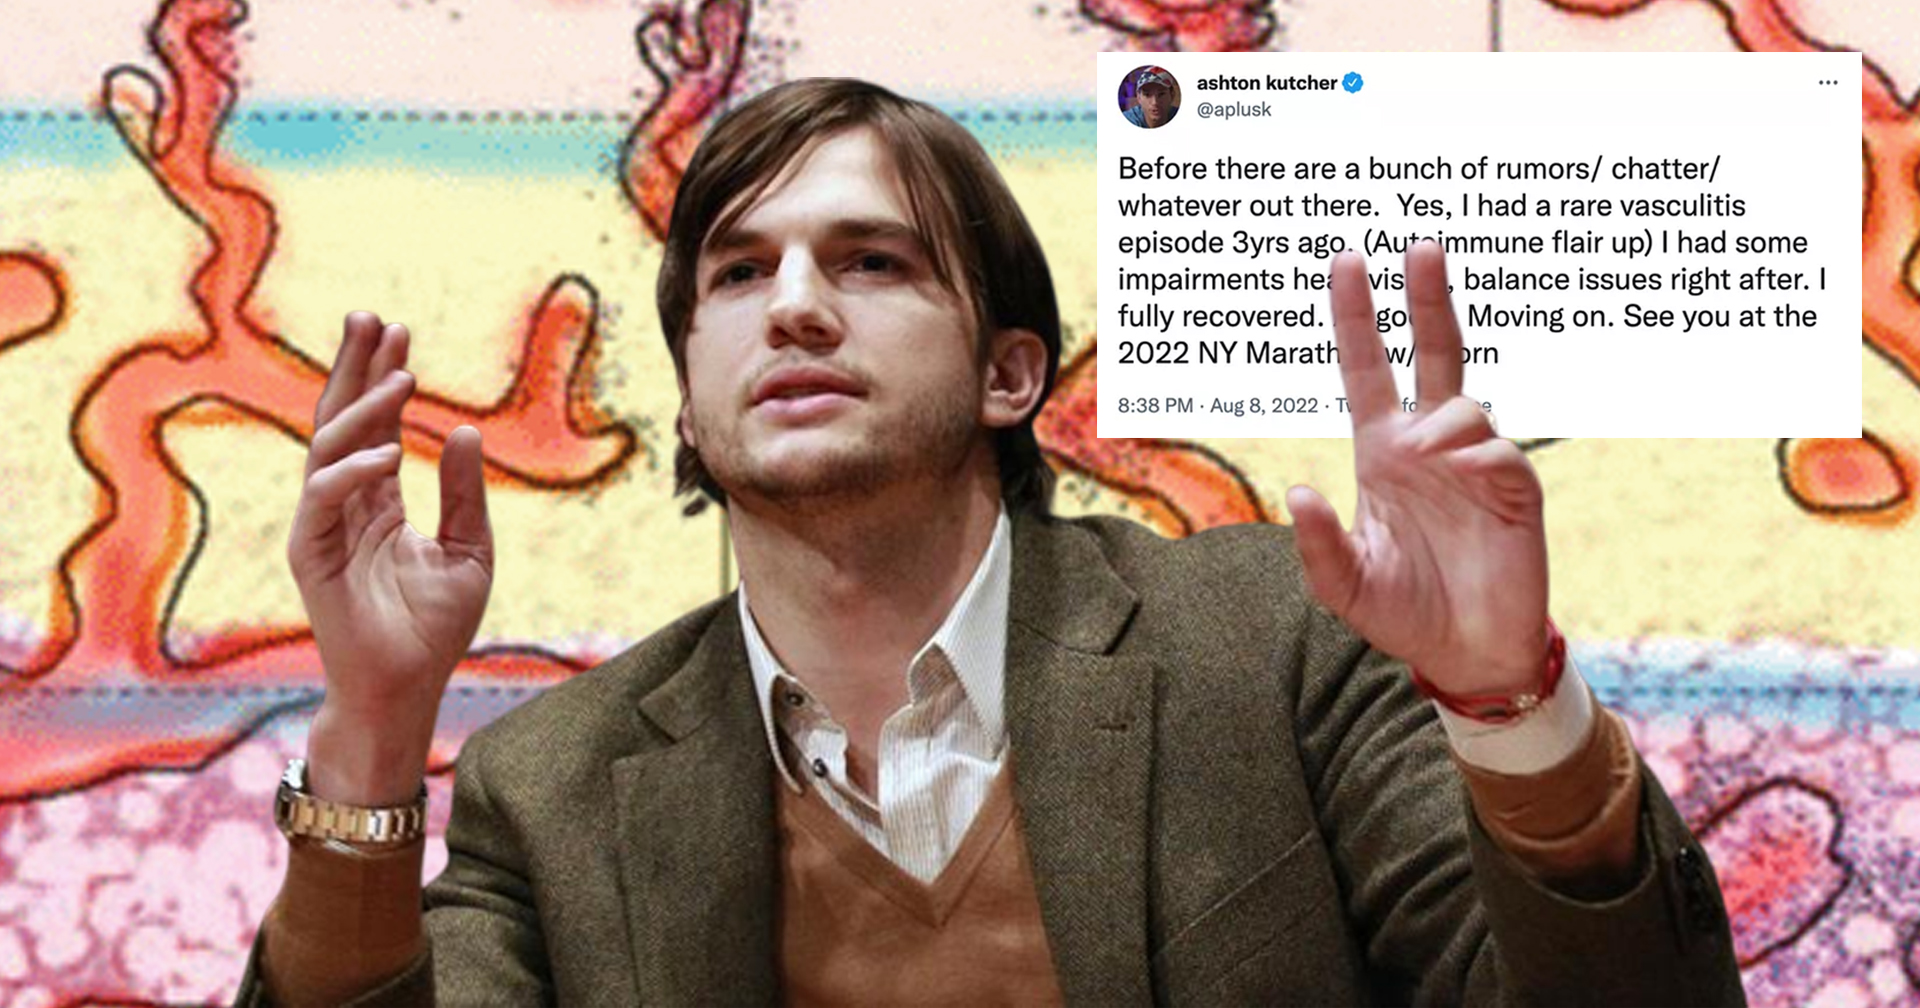 Ashton Kutcher เผยเมื่อ 3 ปีก่อน เคยเป็นโรคหลอดเลือดอักเสบ จนตาเกือบบอด